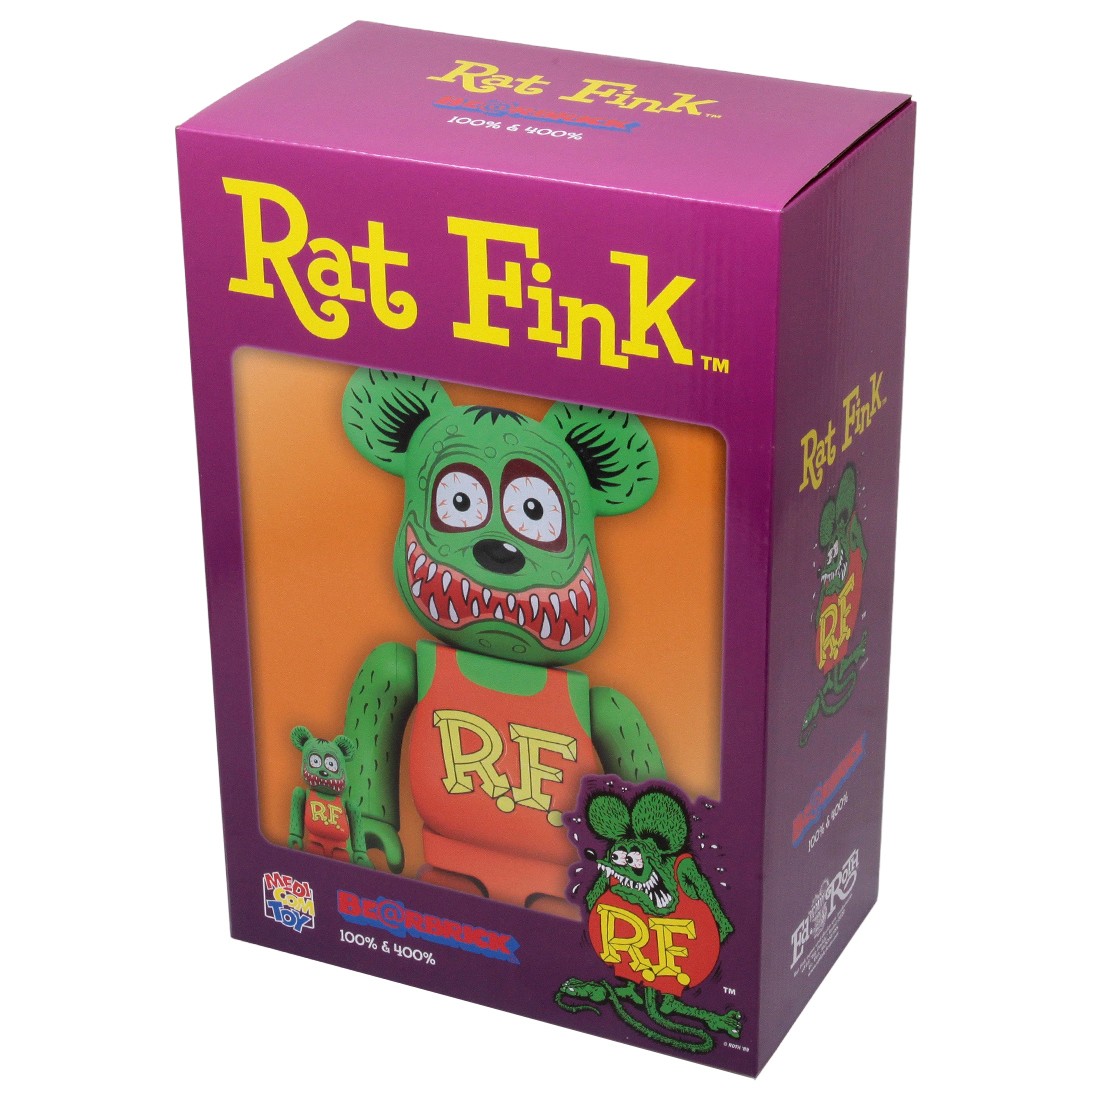 Medicom Rat Fink 100% 400% Bearbrick Figure Set (green)